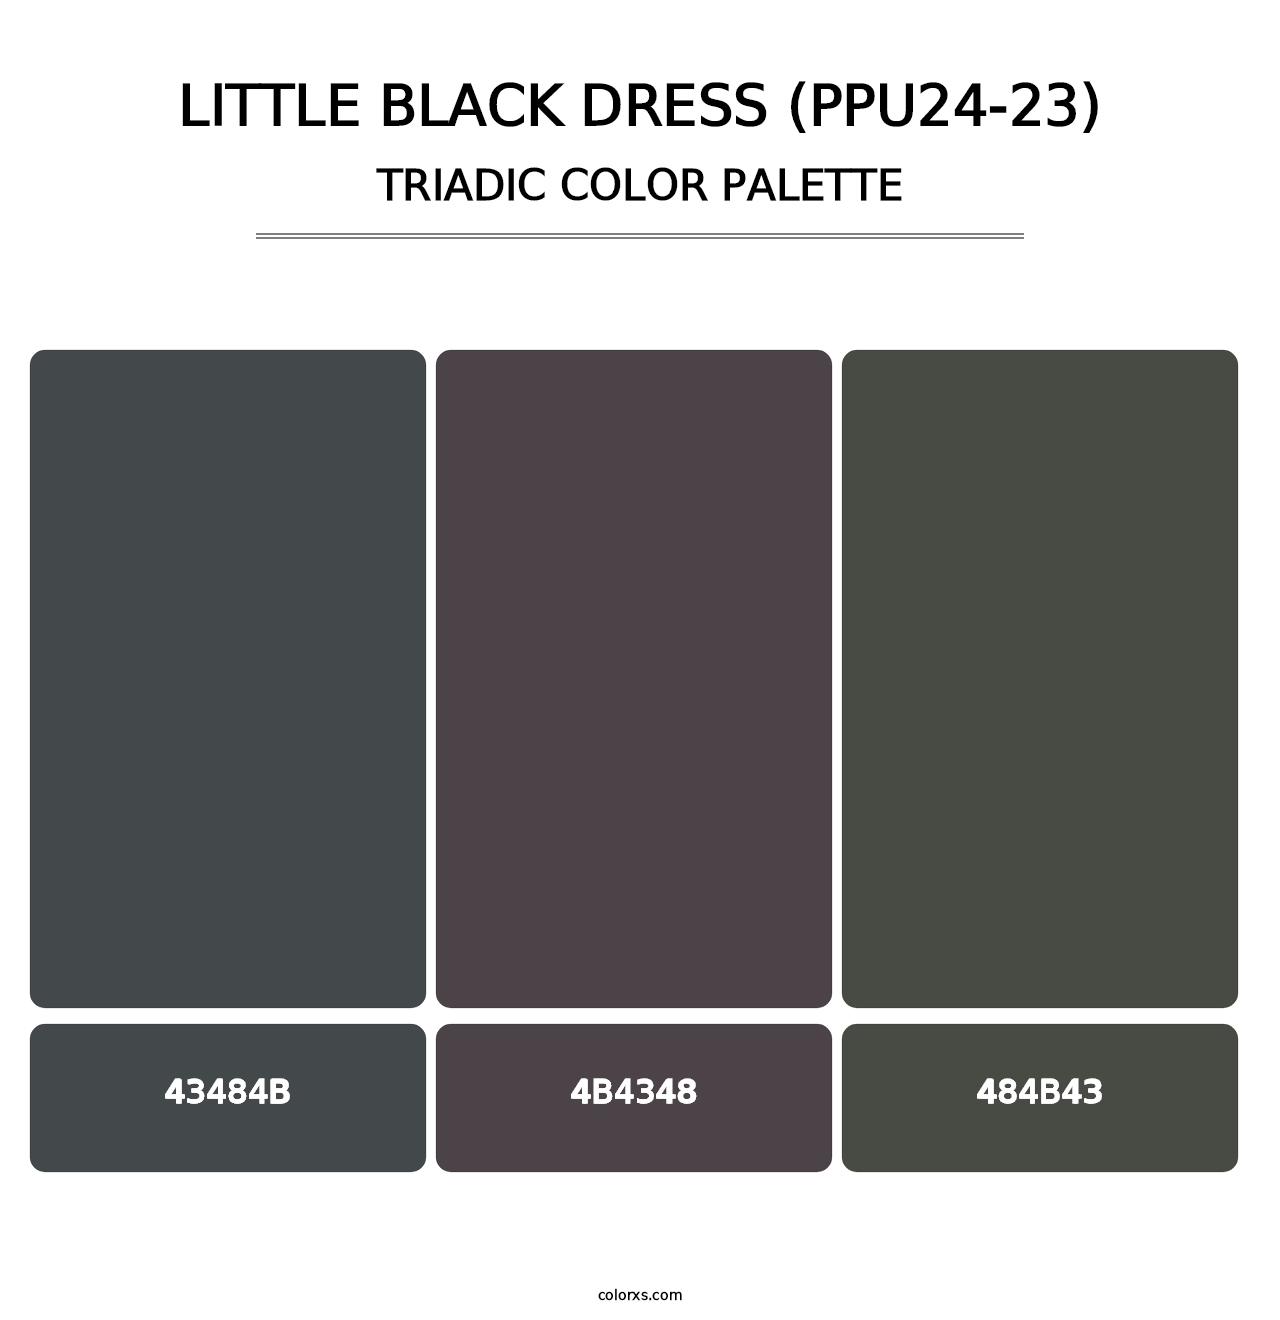 Little Black Dress (PPU24-23) - Triadic Color Palette